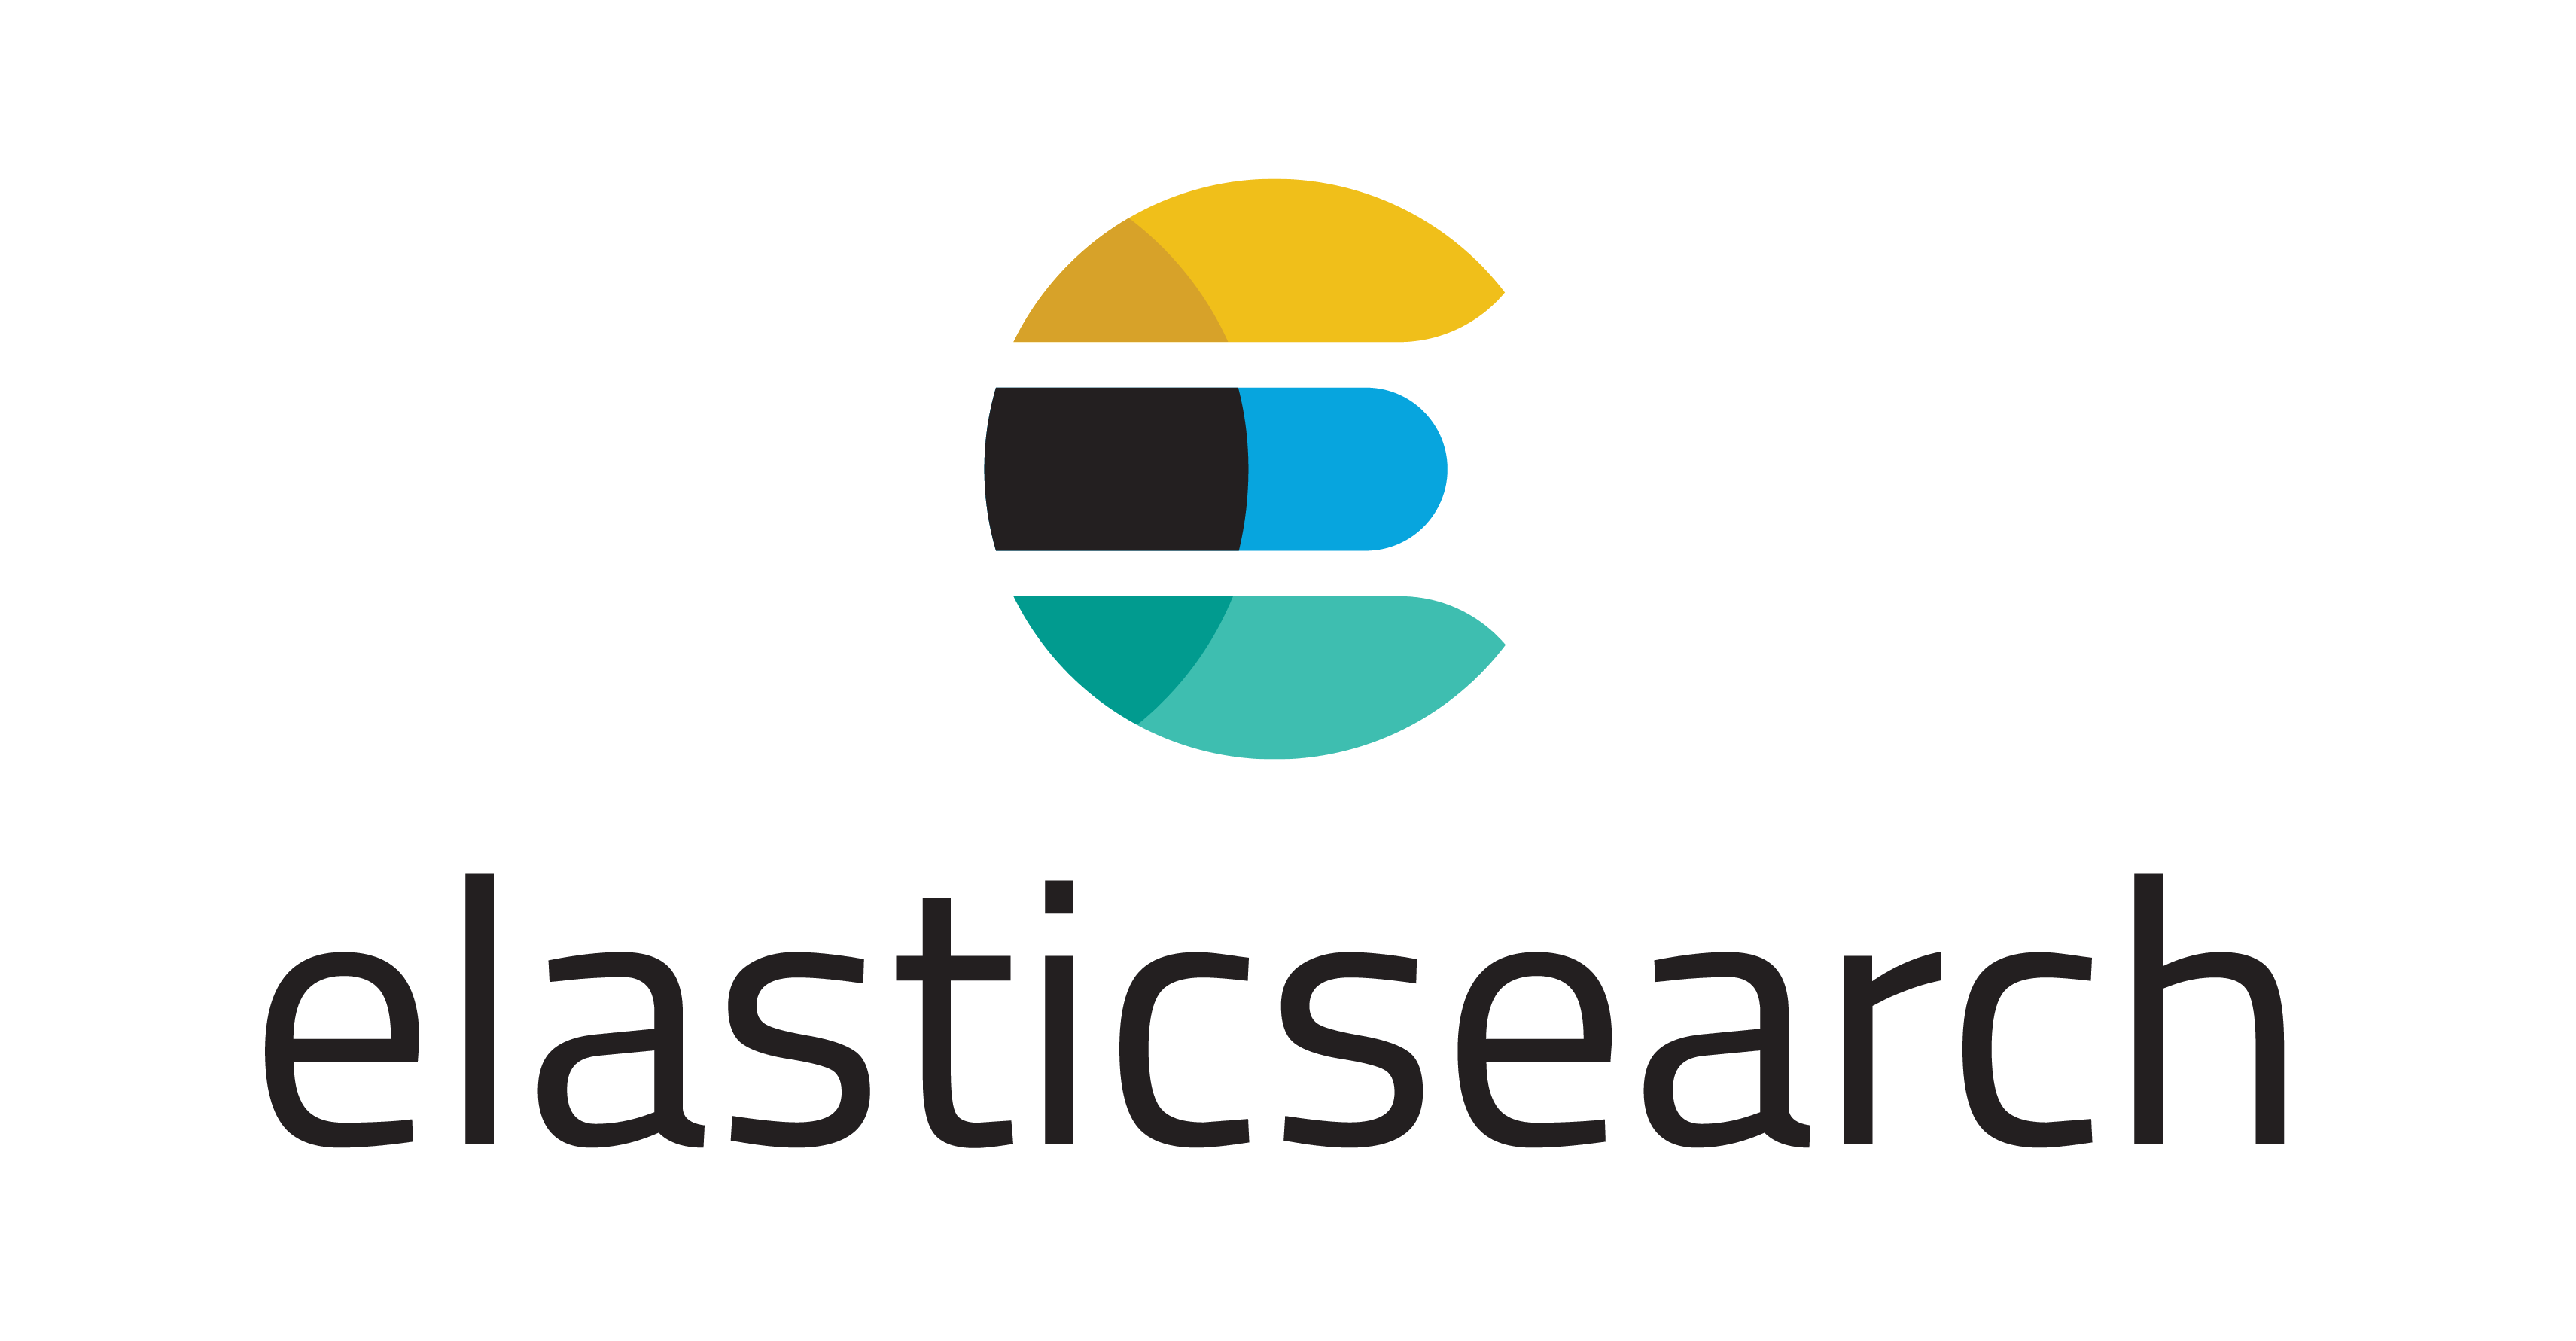 Elasticsearch mac download windows 10